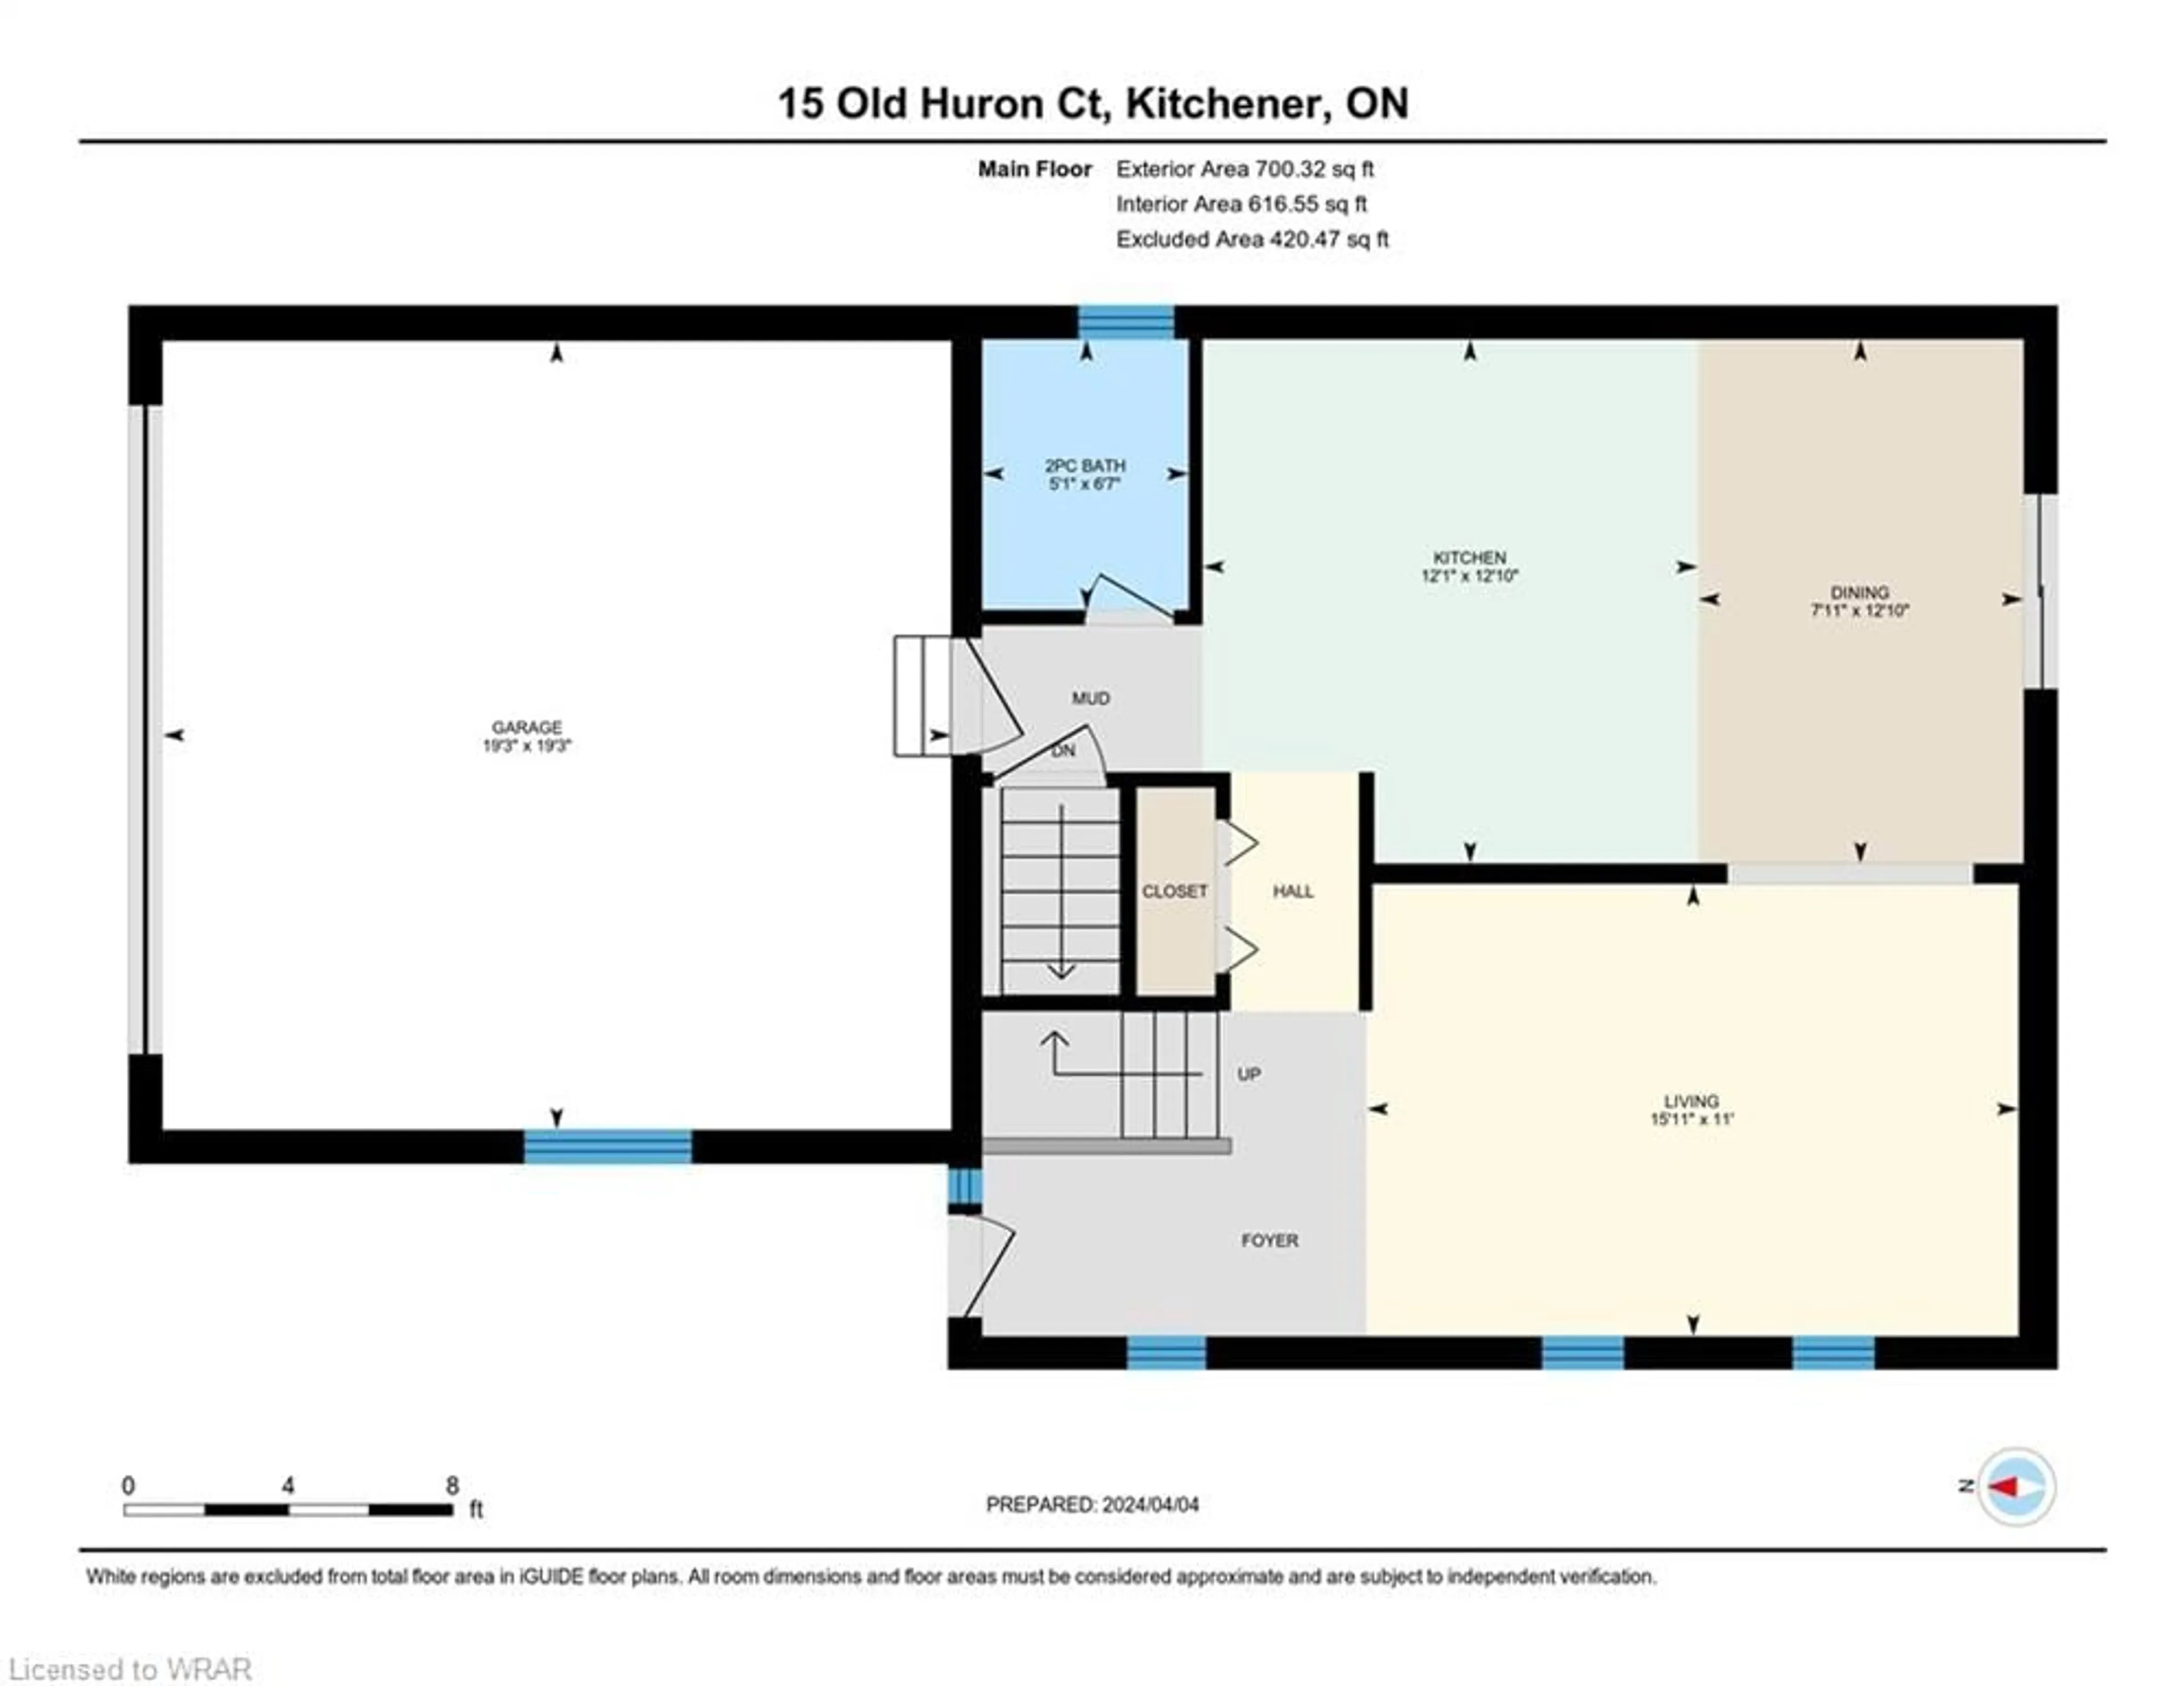 Floor plan for 15 Old Huron Crt, Kitchener Ontario N2R 1L6